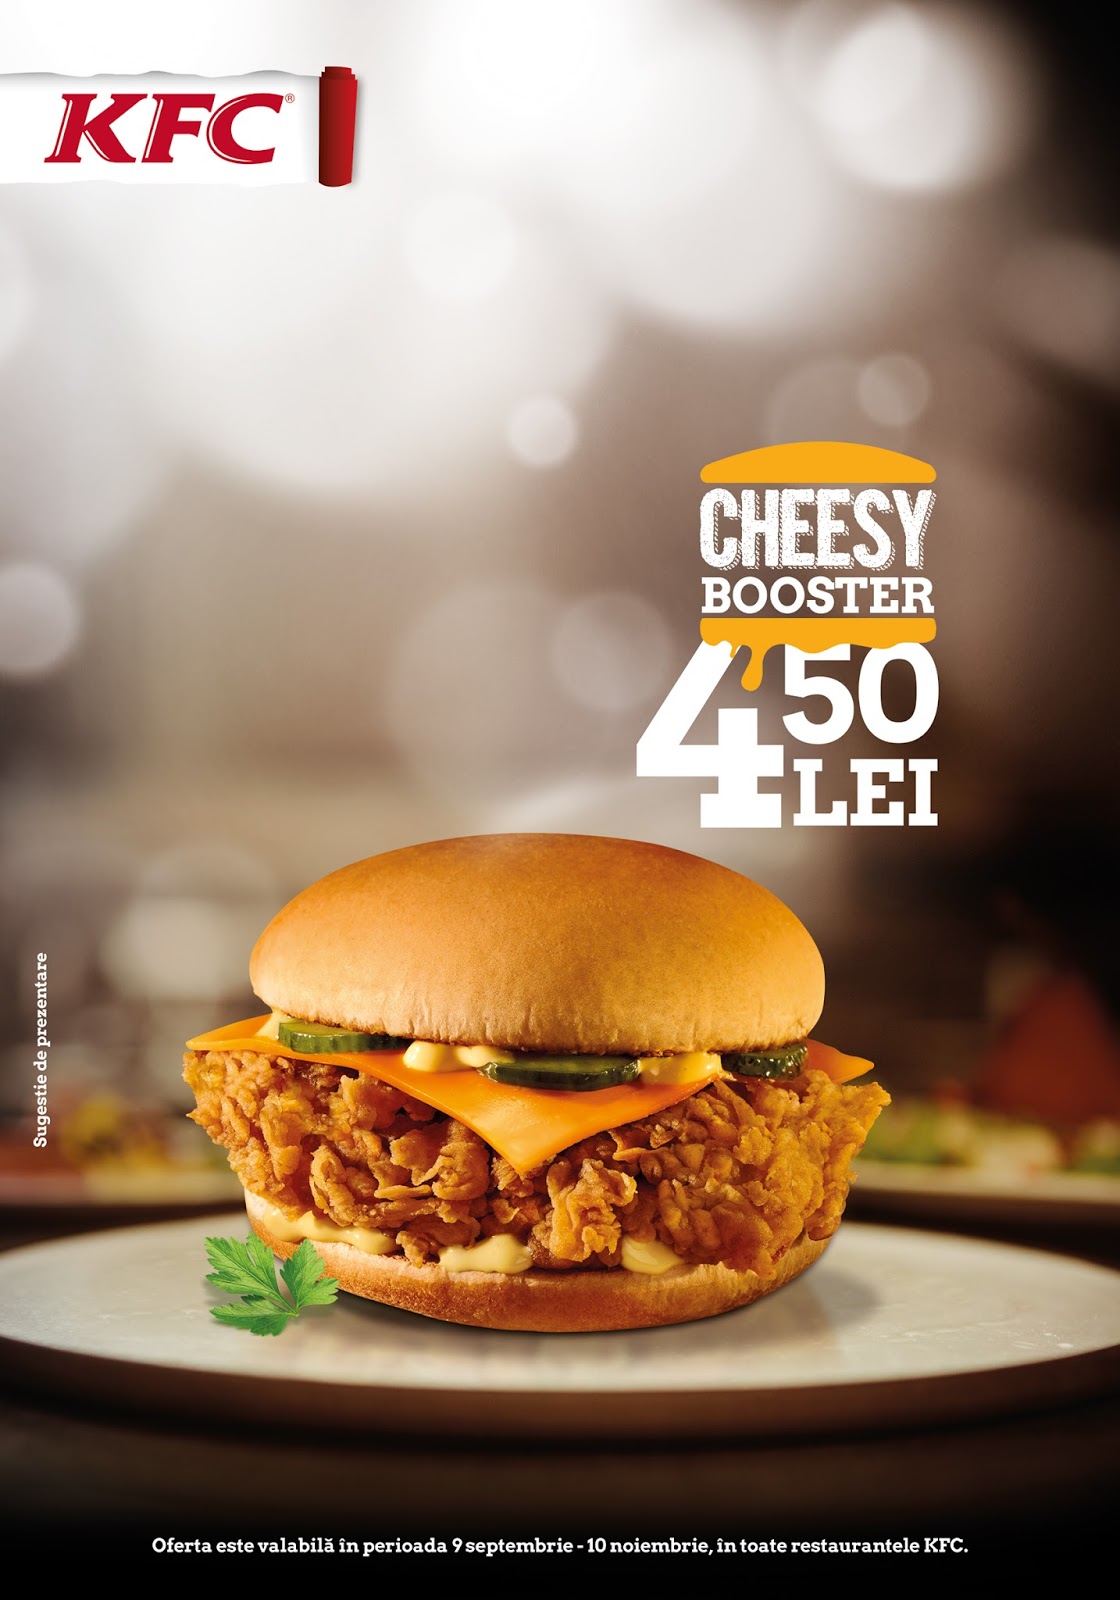 Mega Bacau: KFC lansează un nou produs, Cheesy Booster